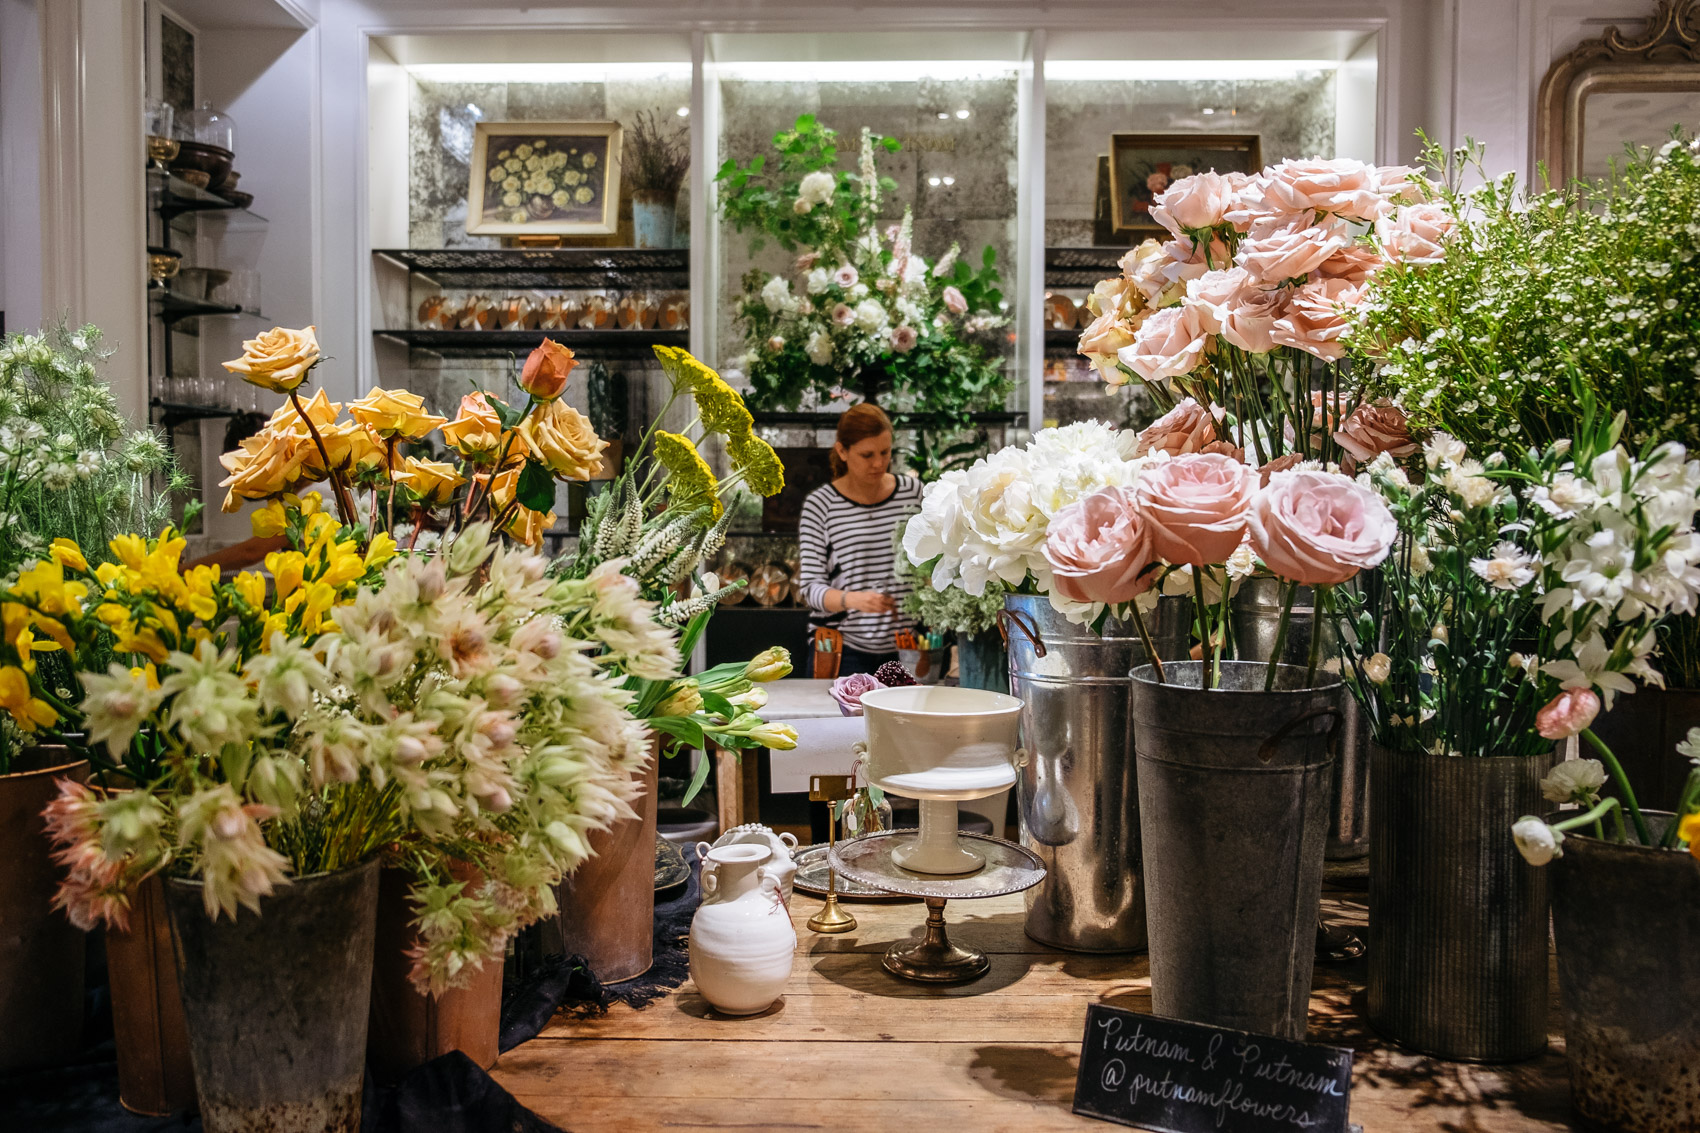 Putnam & Putnam flower shop in the Flatiron District